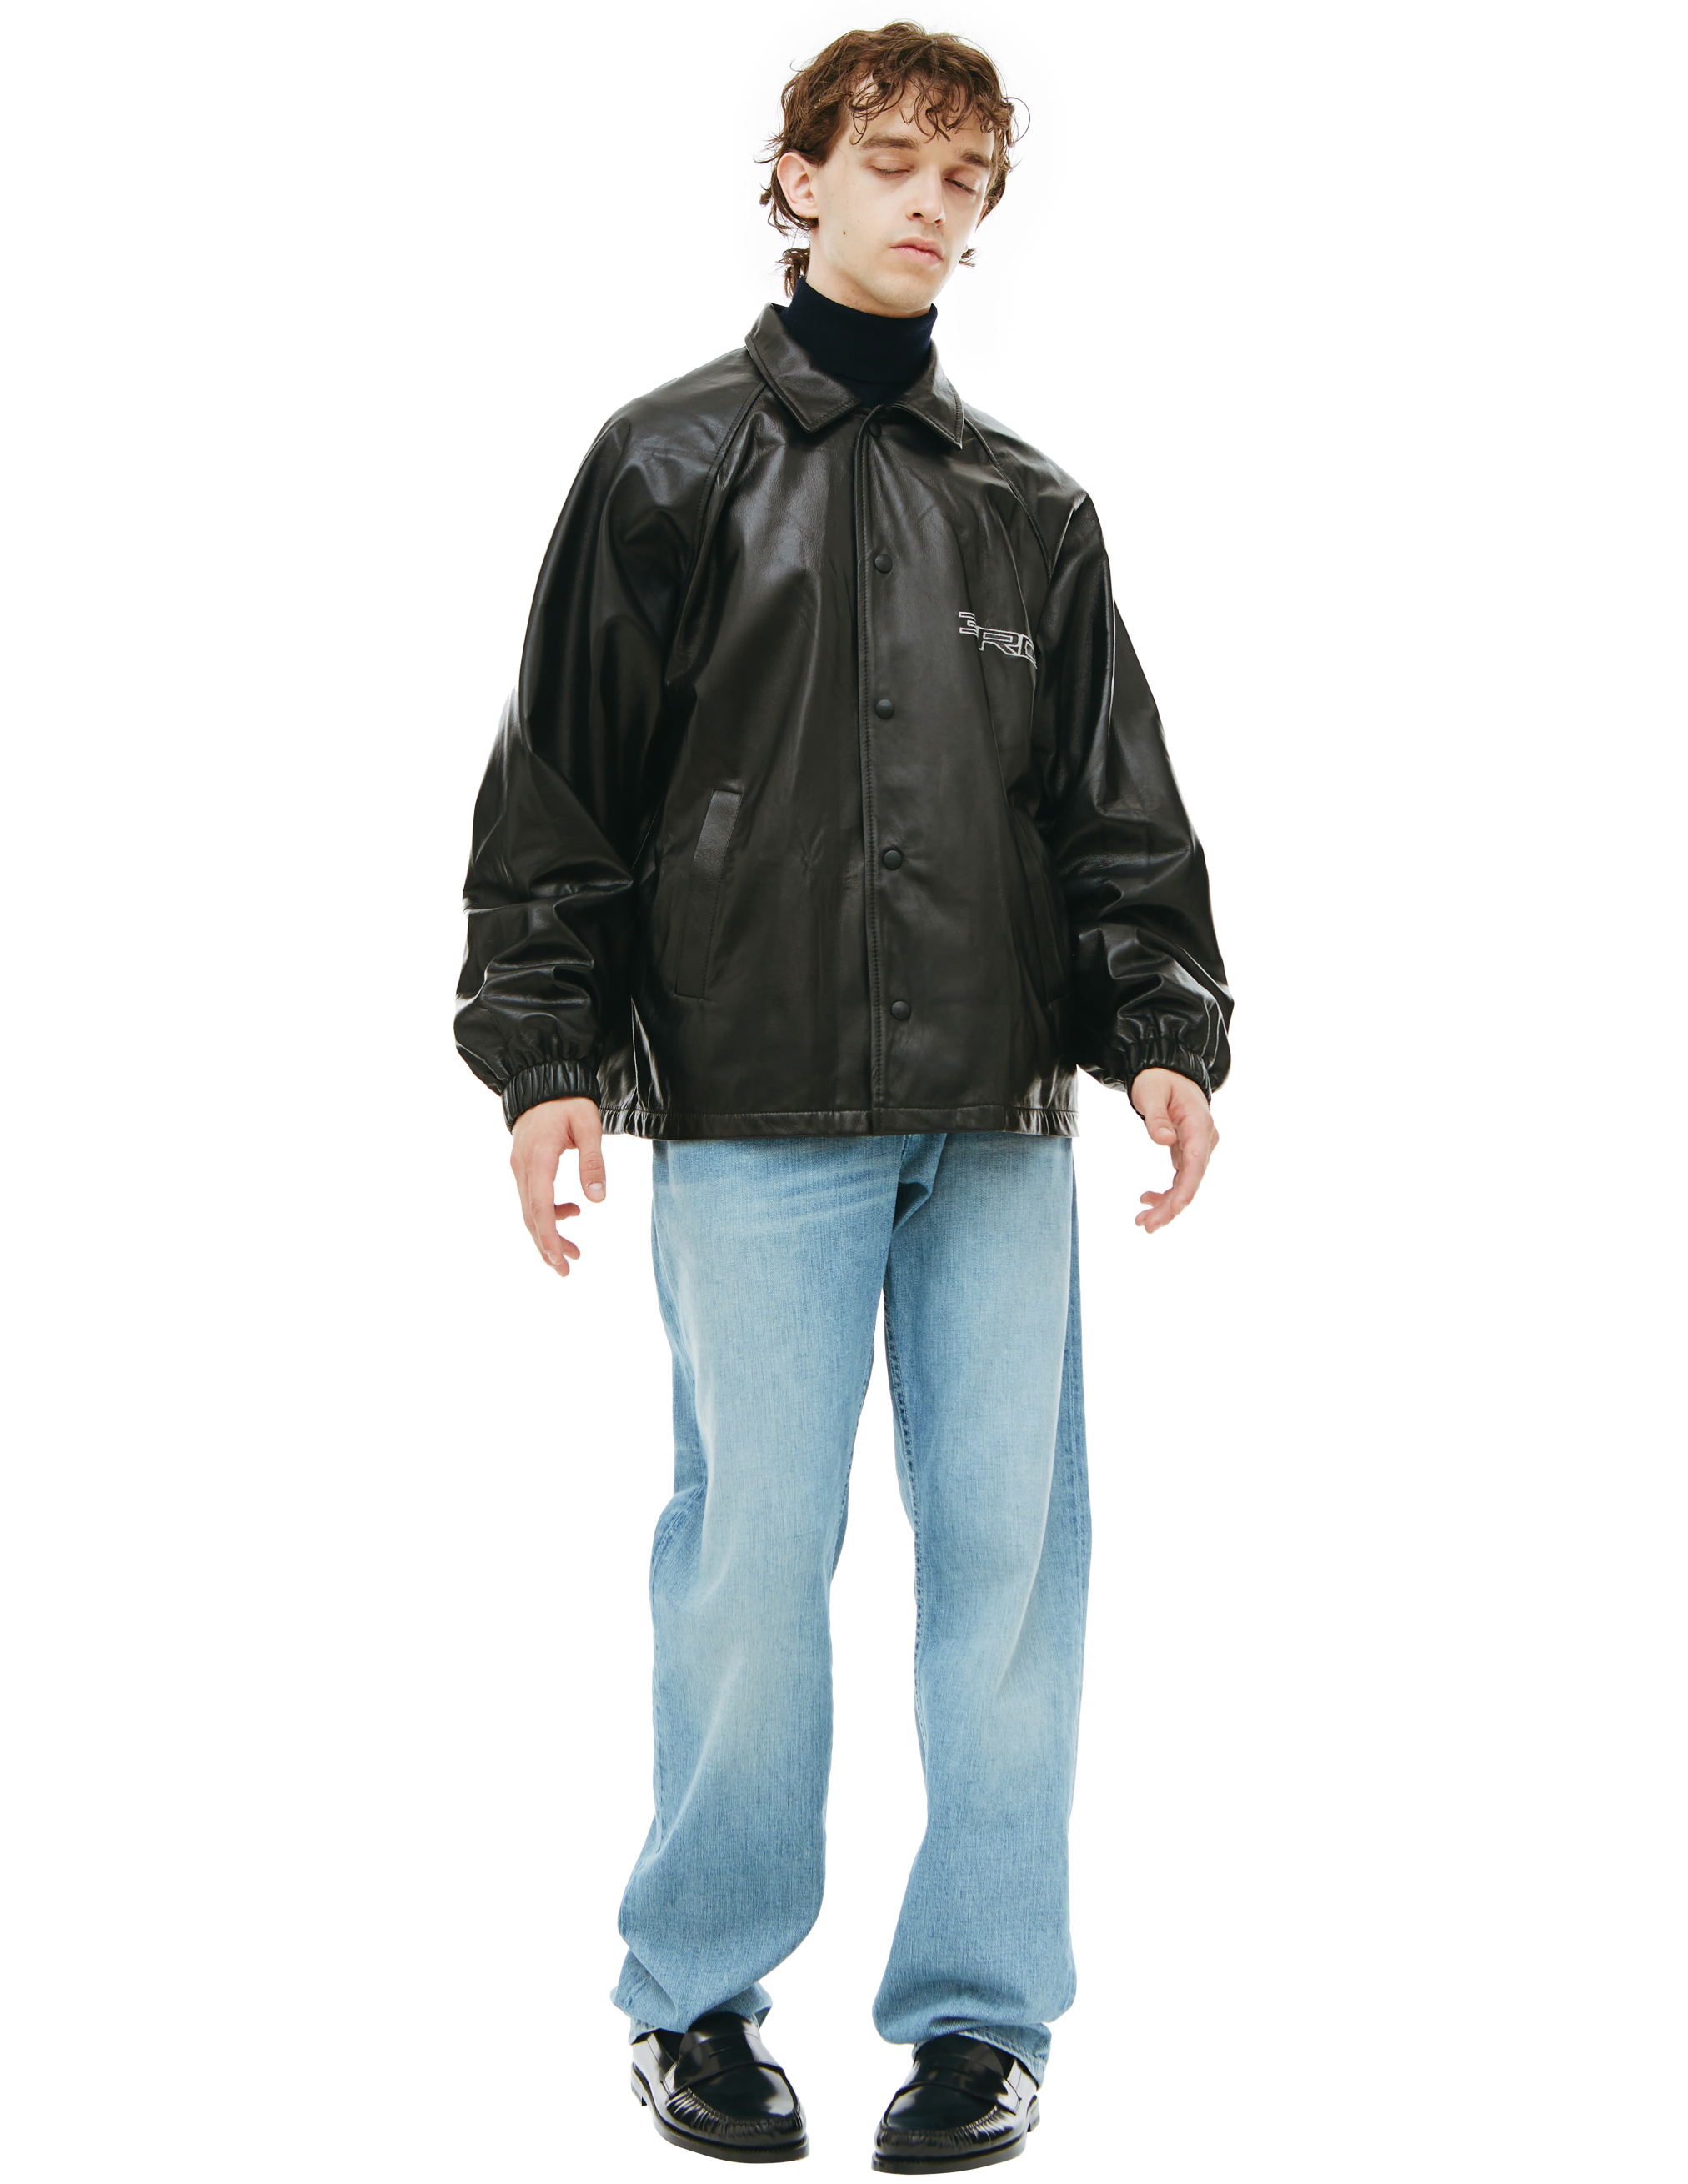 Кожаная куртка с вышивкой ERD Enfants Riches Deprimes 030/104, размер XXL;L